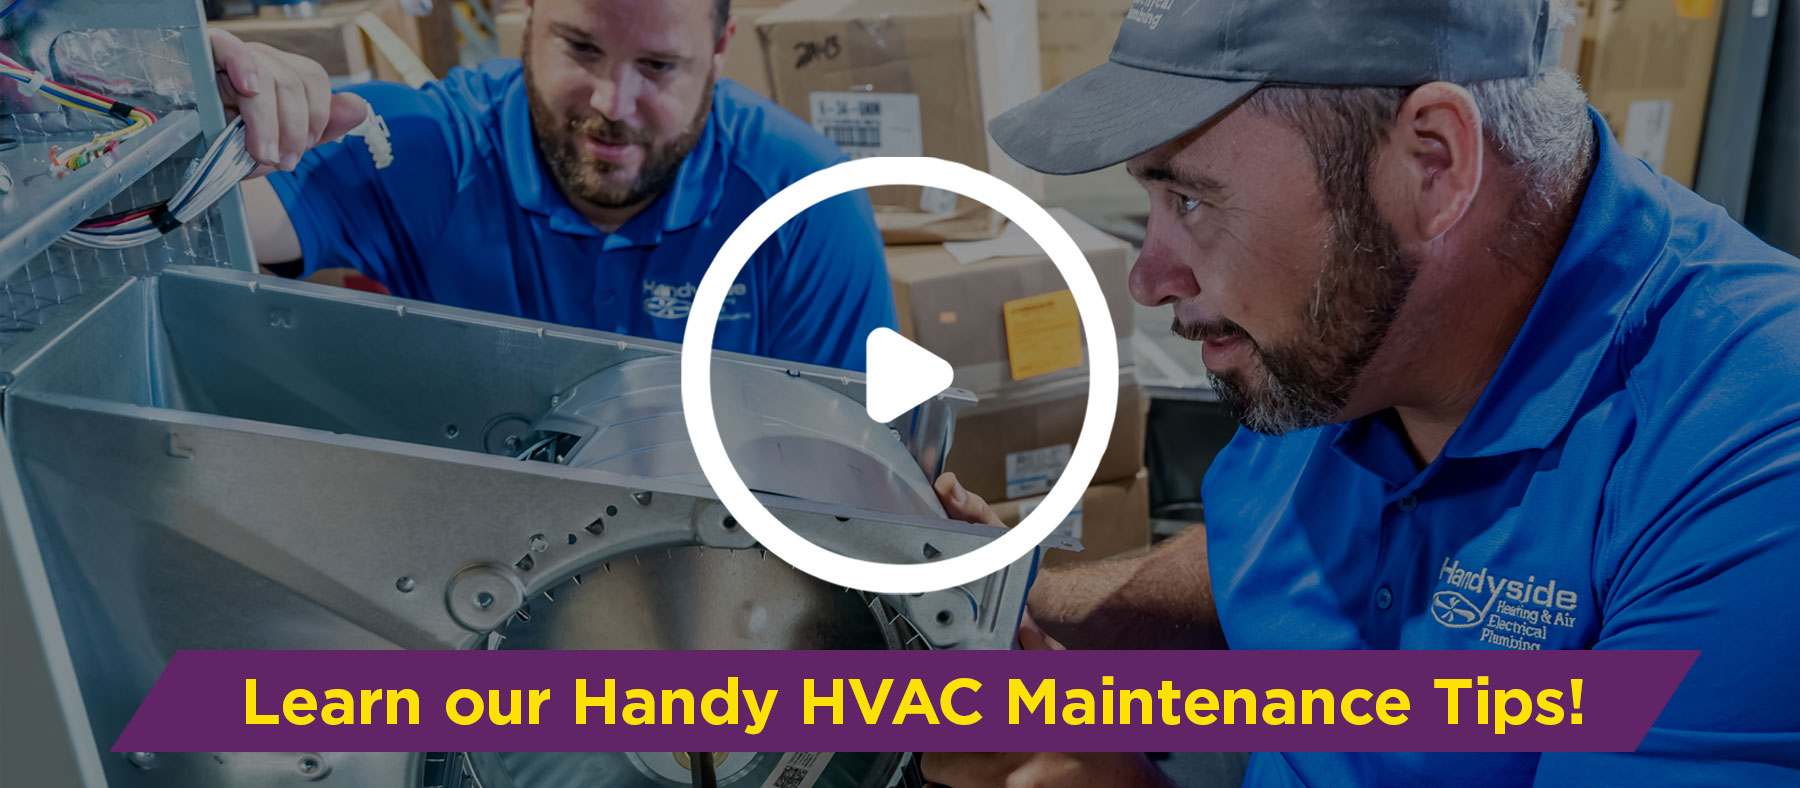 HVAC maintenance video tips